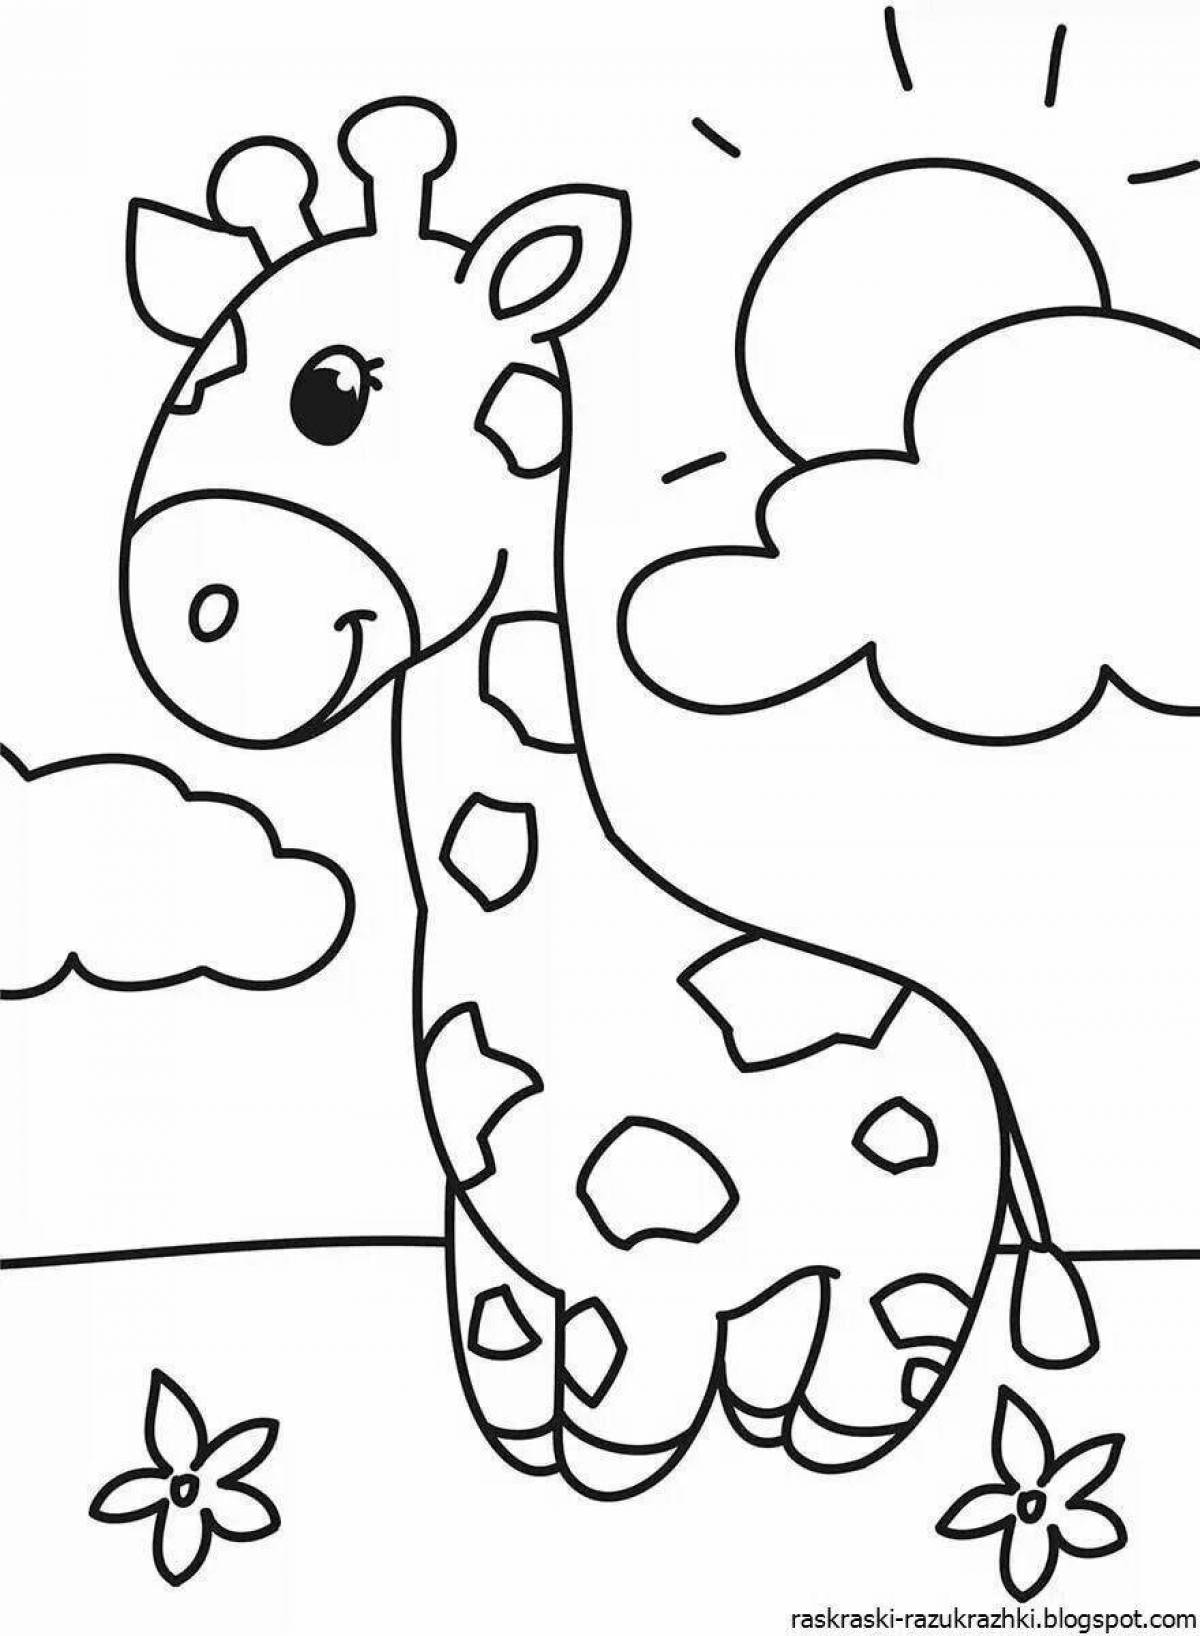 Креативная раскраска для малышей 4-5 лет